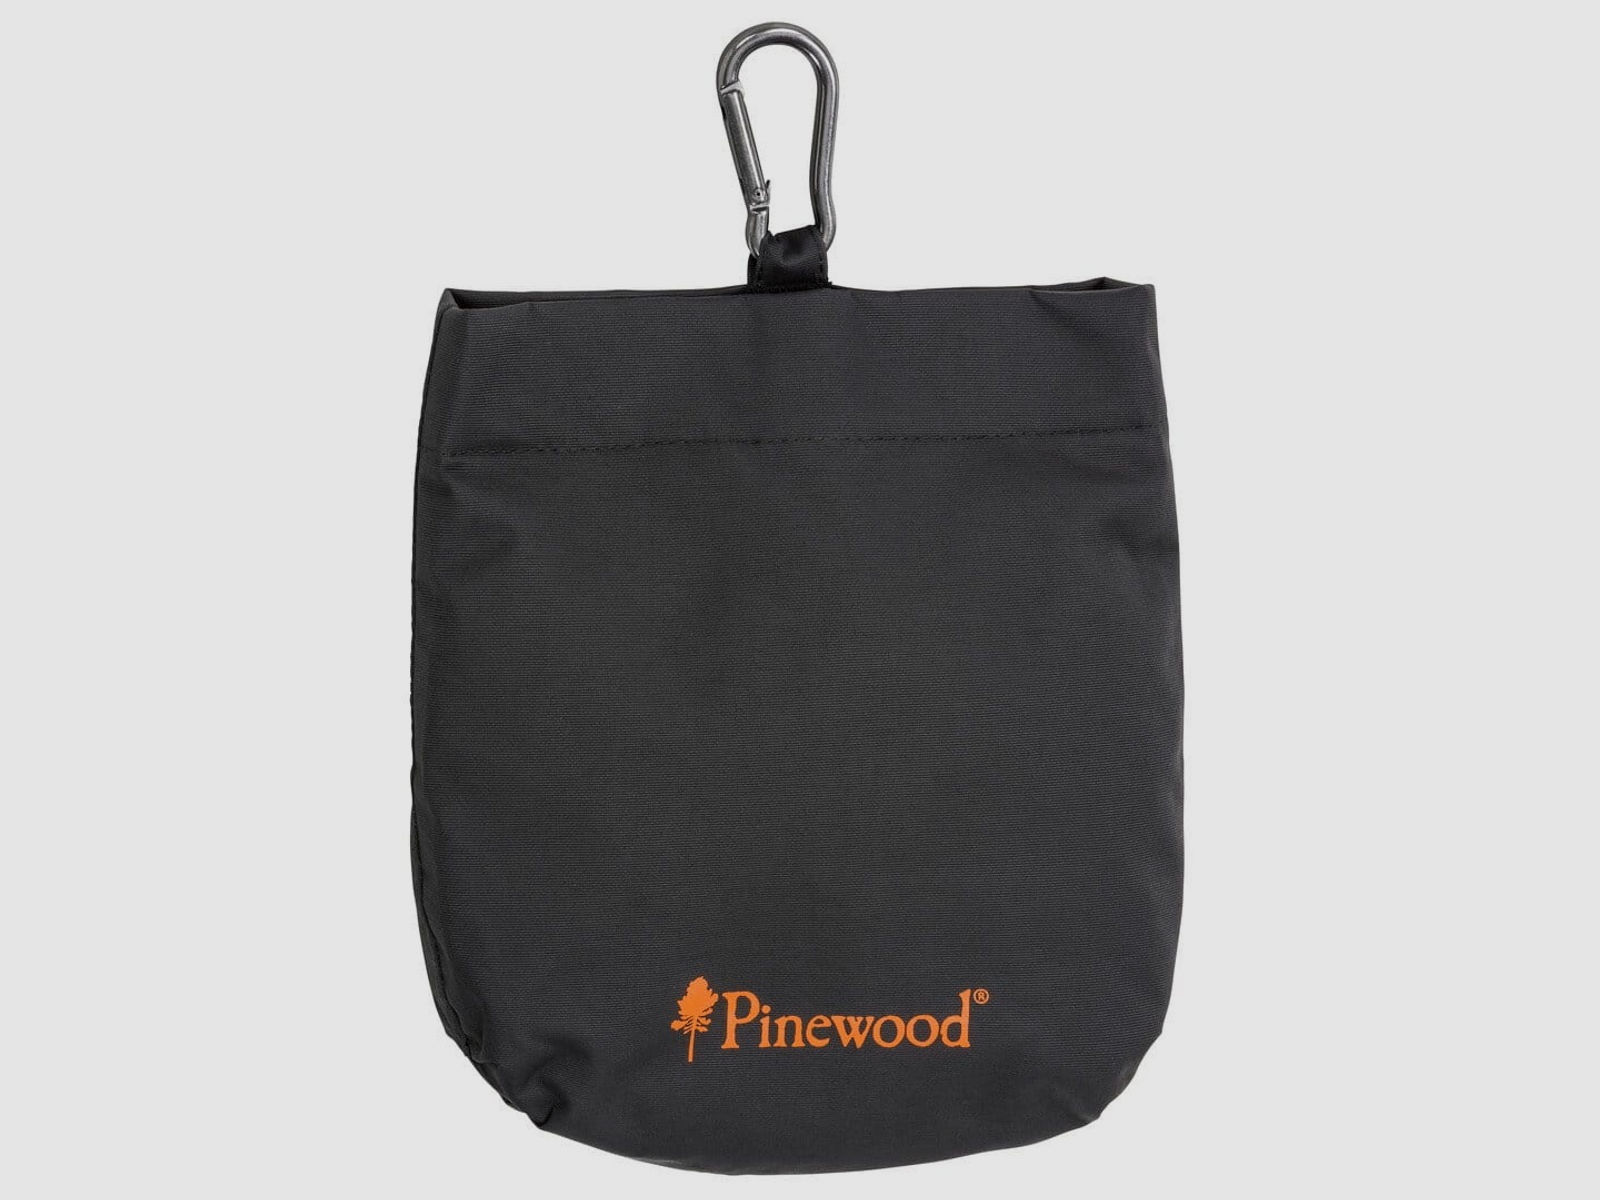 Pinewood Dog Sports Leckerli Tasche